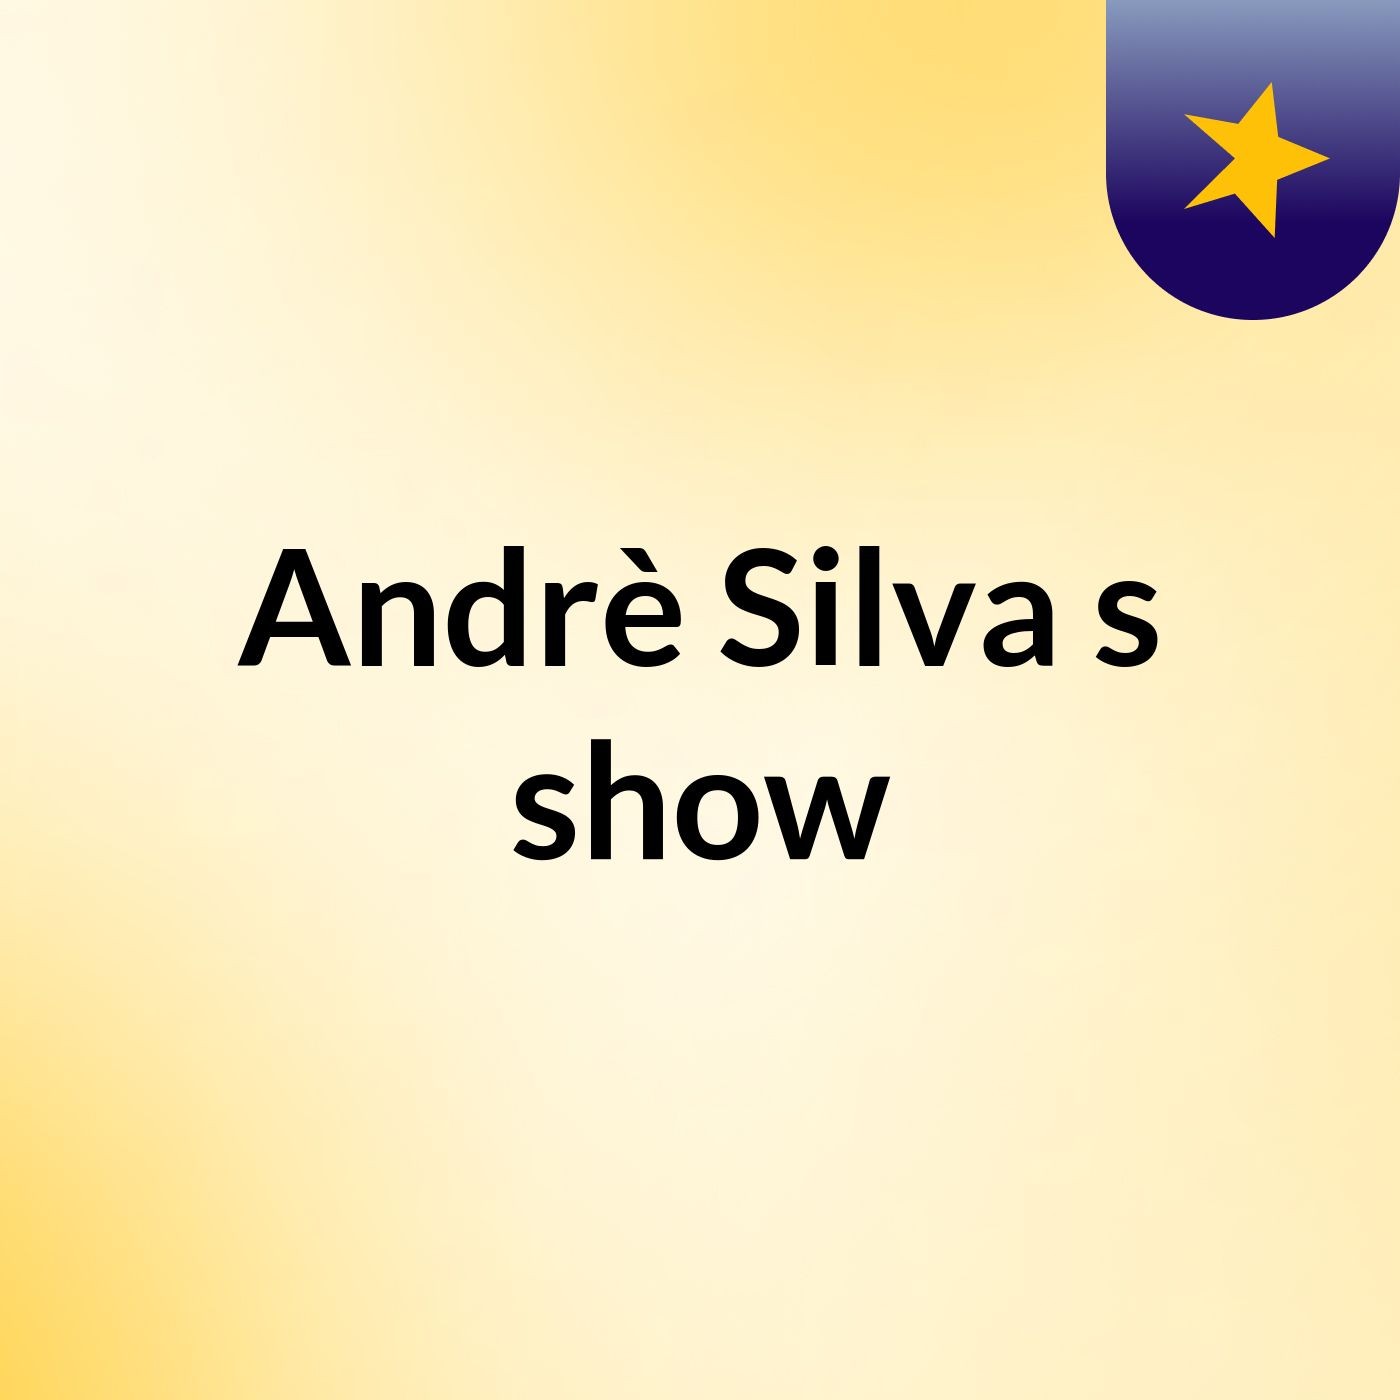 Andrè Silva's show